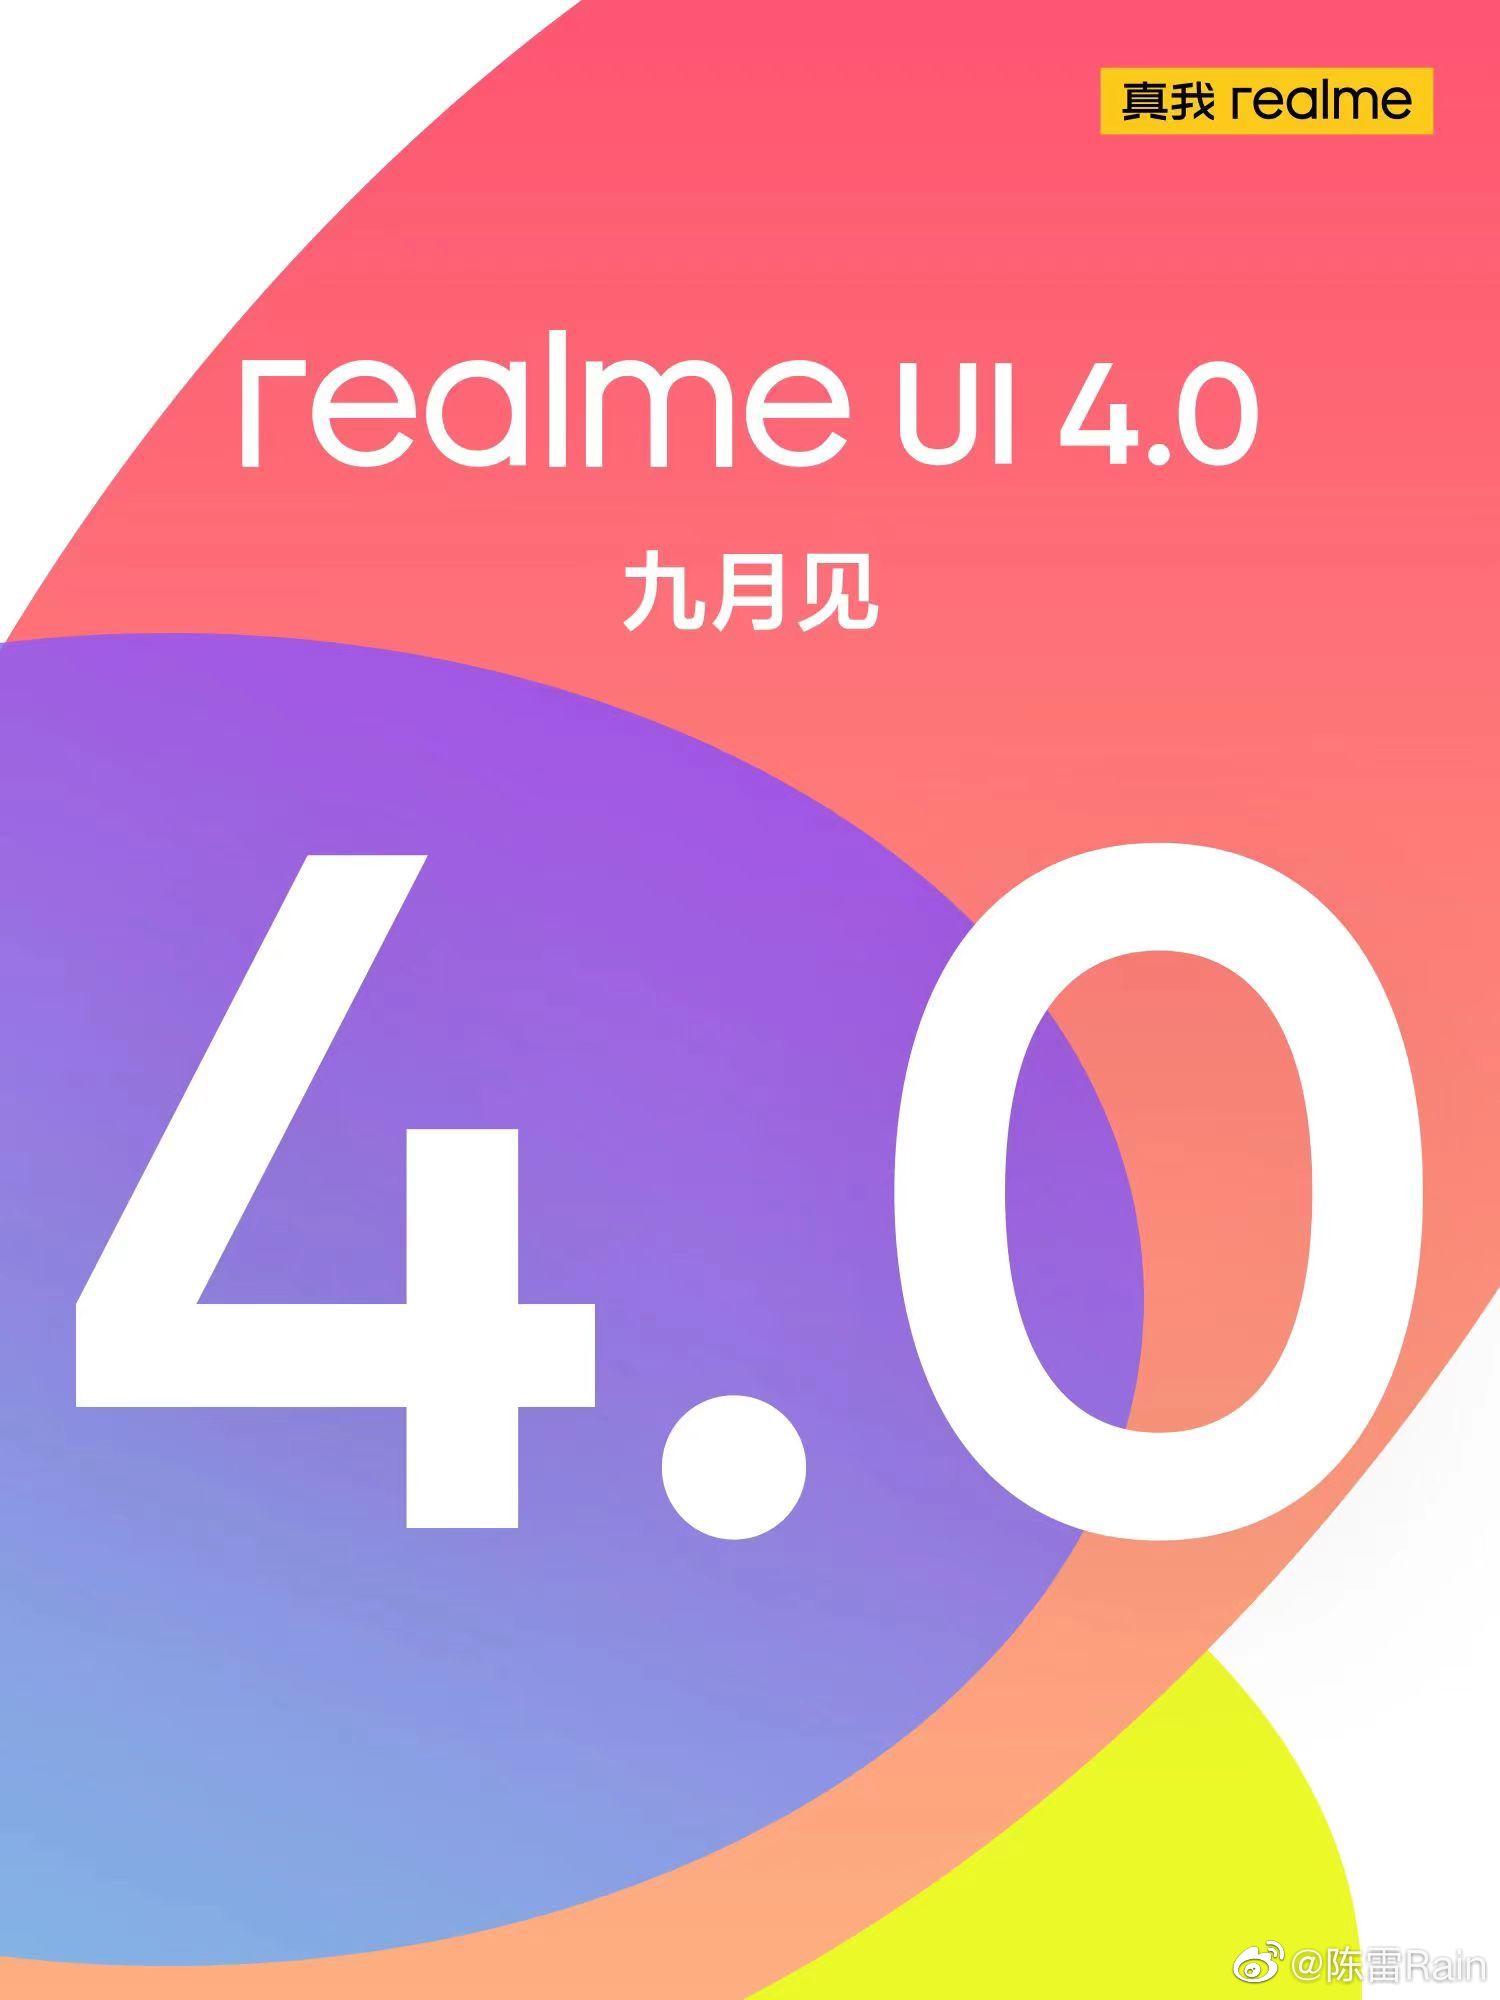 Realme UI 4.0 weibo